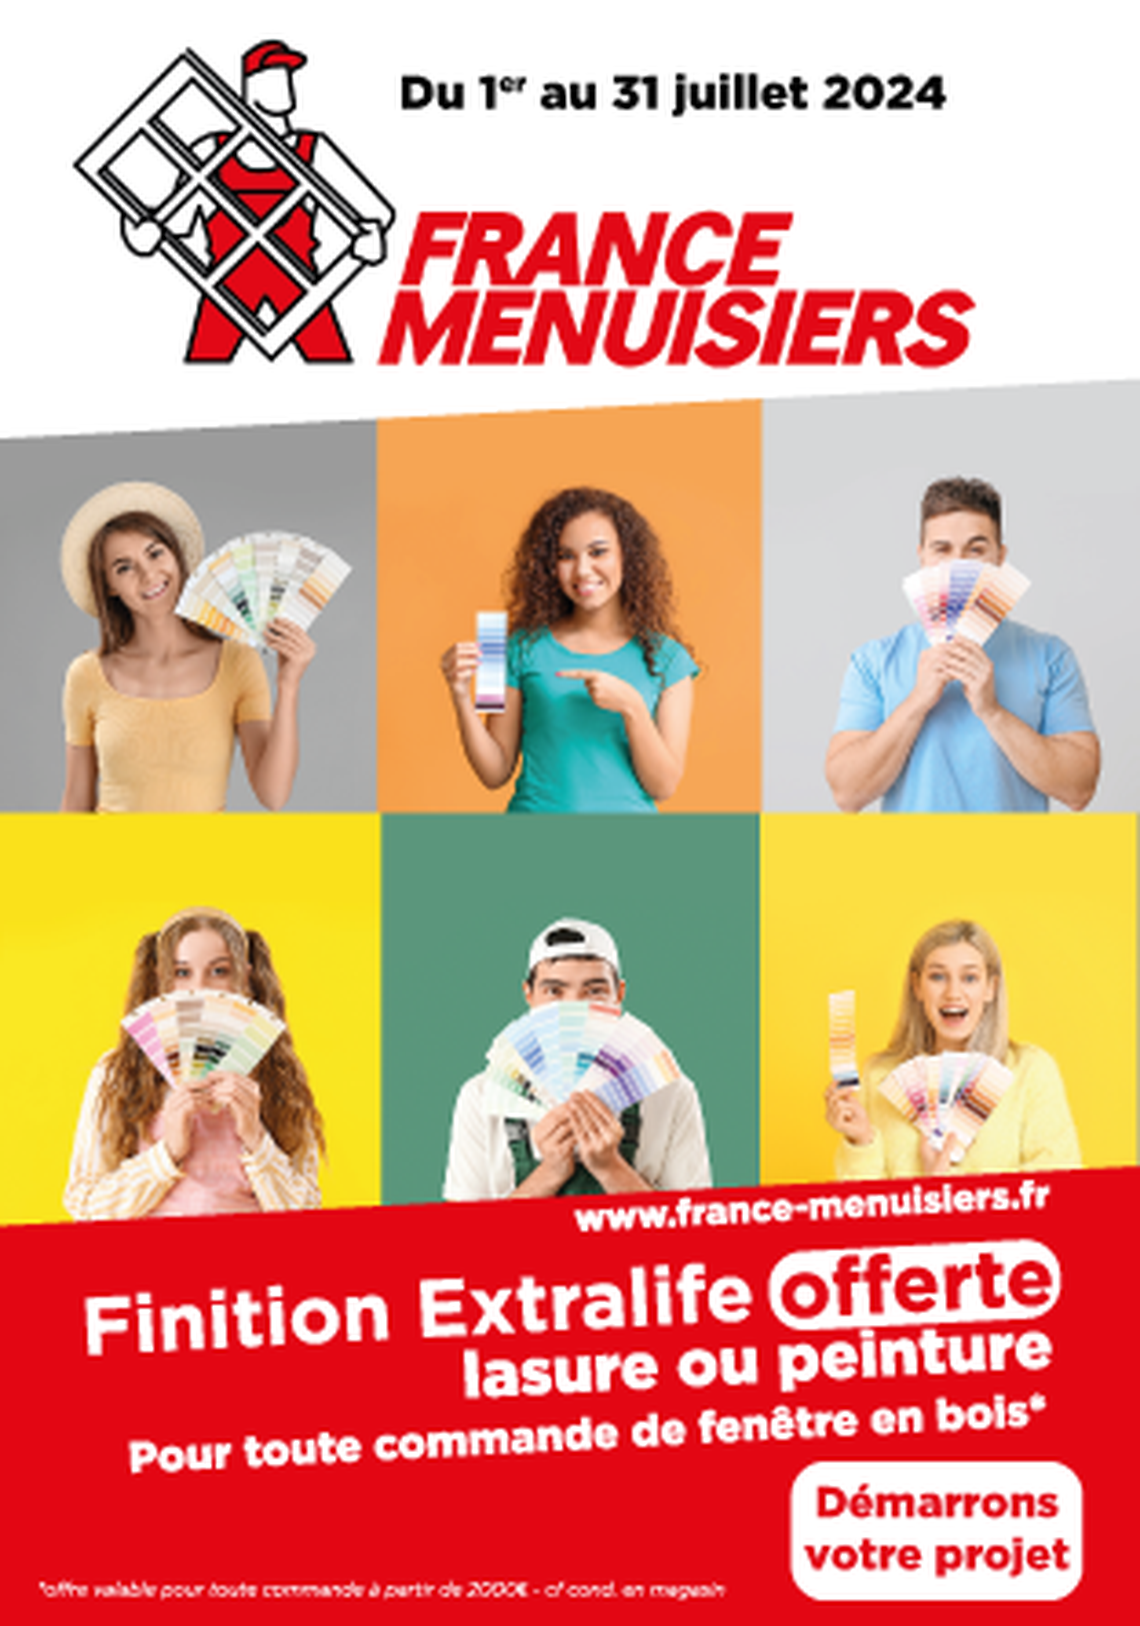 FRANCE MENUISIERS Saintes - Finition Extralife Offerte